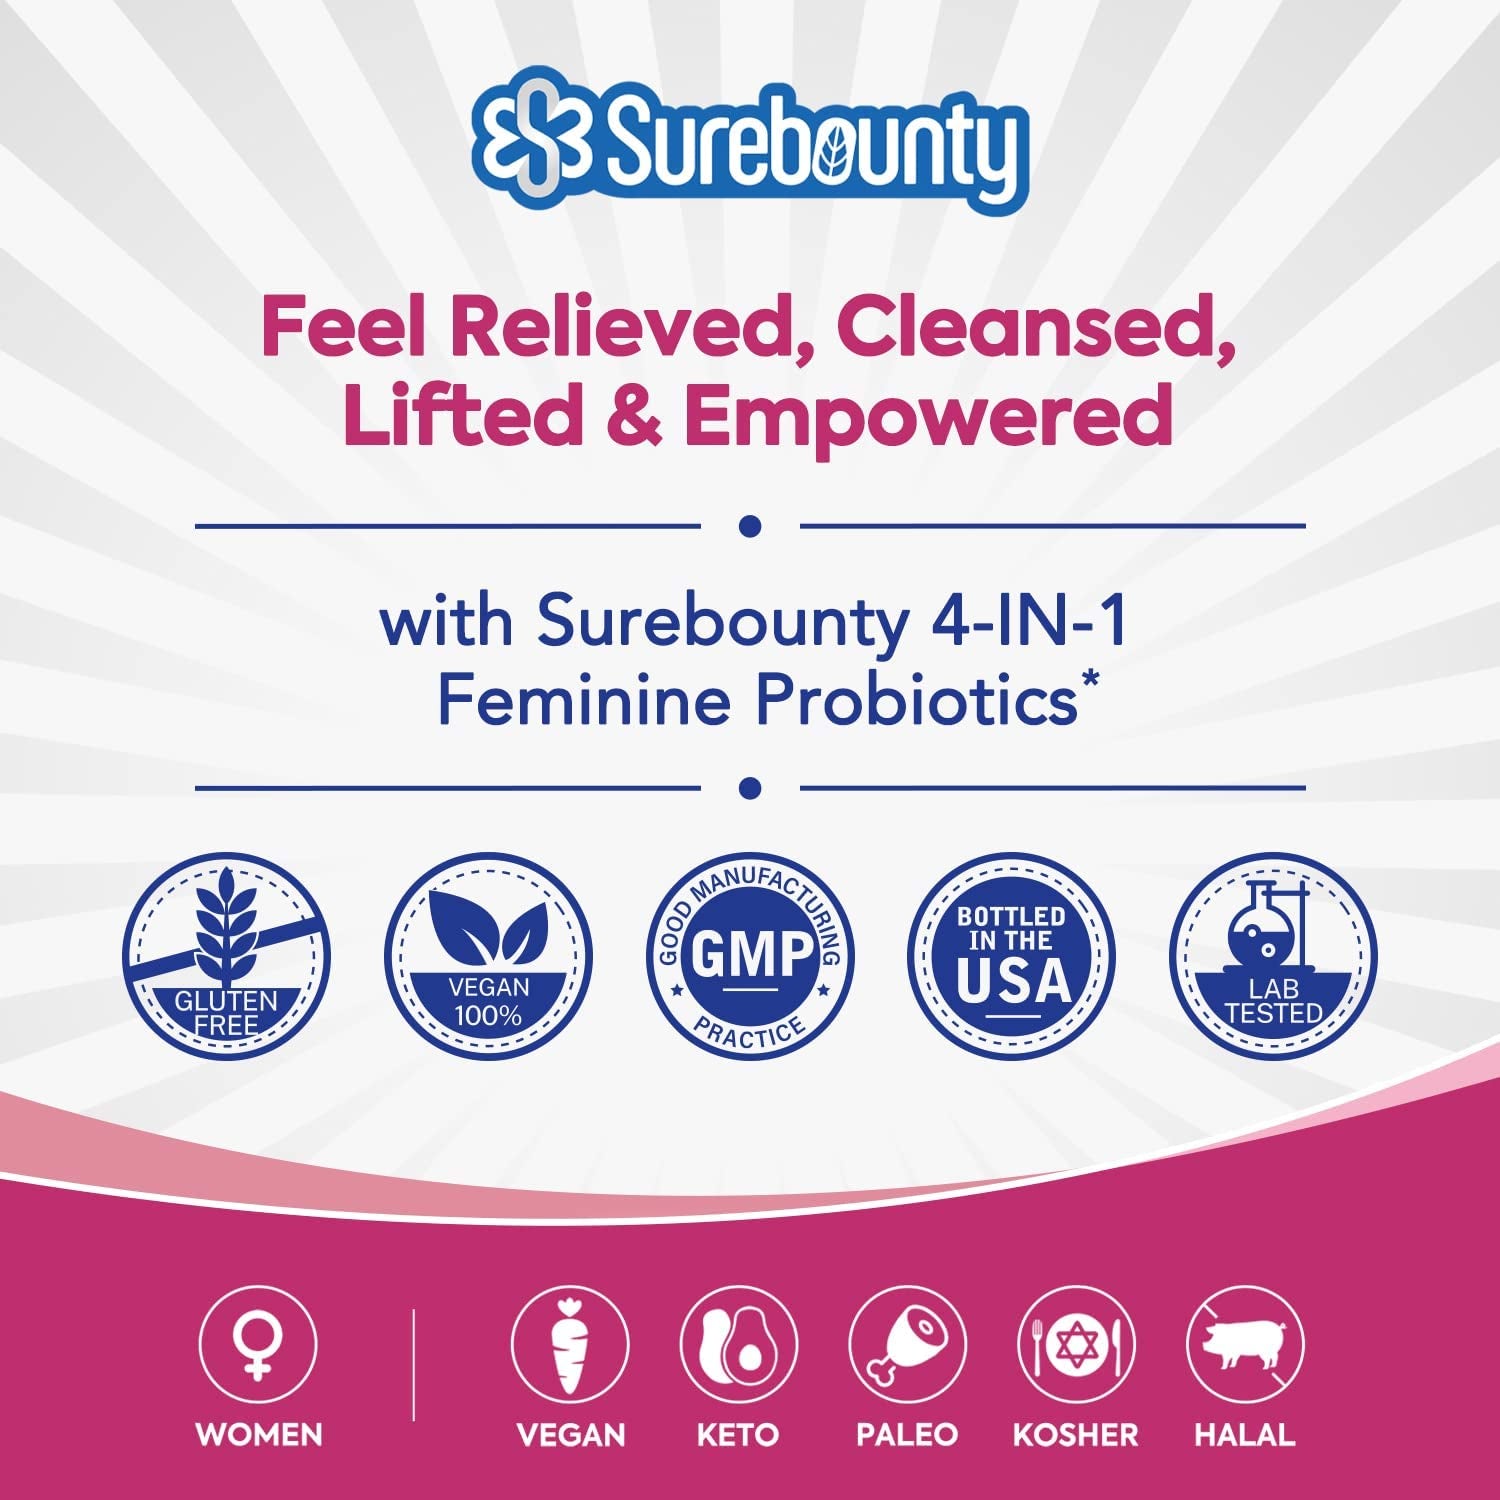 "Ultimate Women's Probiotic: 120 Billion CFU, 34 Strains, Prebiotics, Digestive Enzymes, Cranberry-4-In-1 Feminine Probiotic, Digestive & Vaginal Support, 30Ct - 30 Capsules"